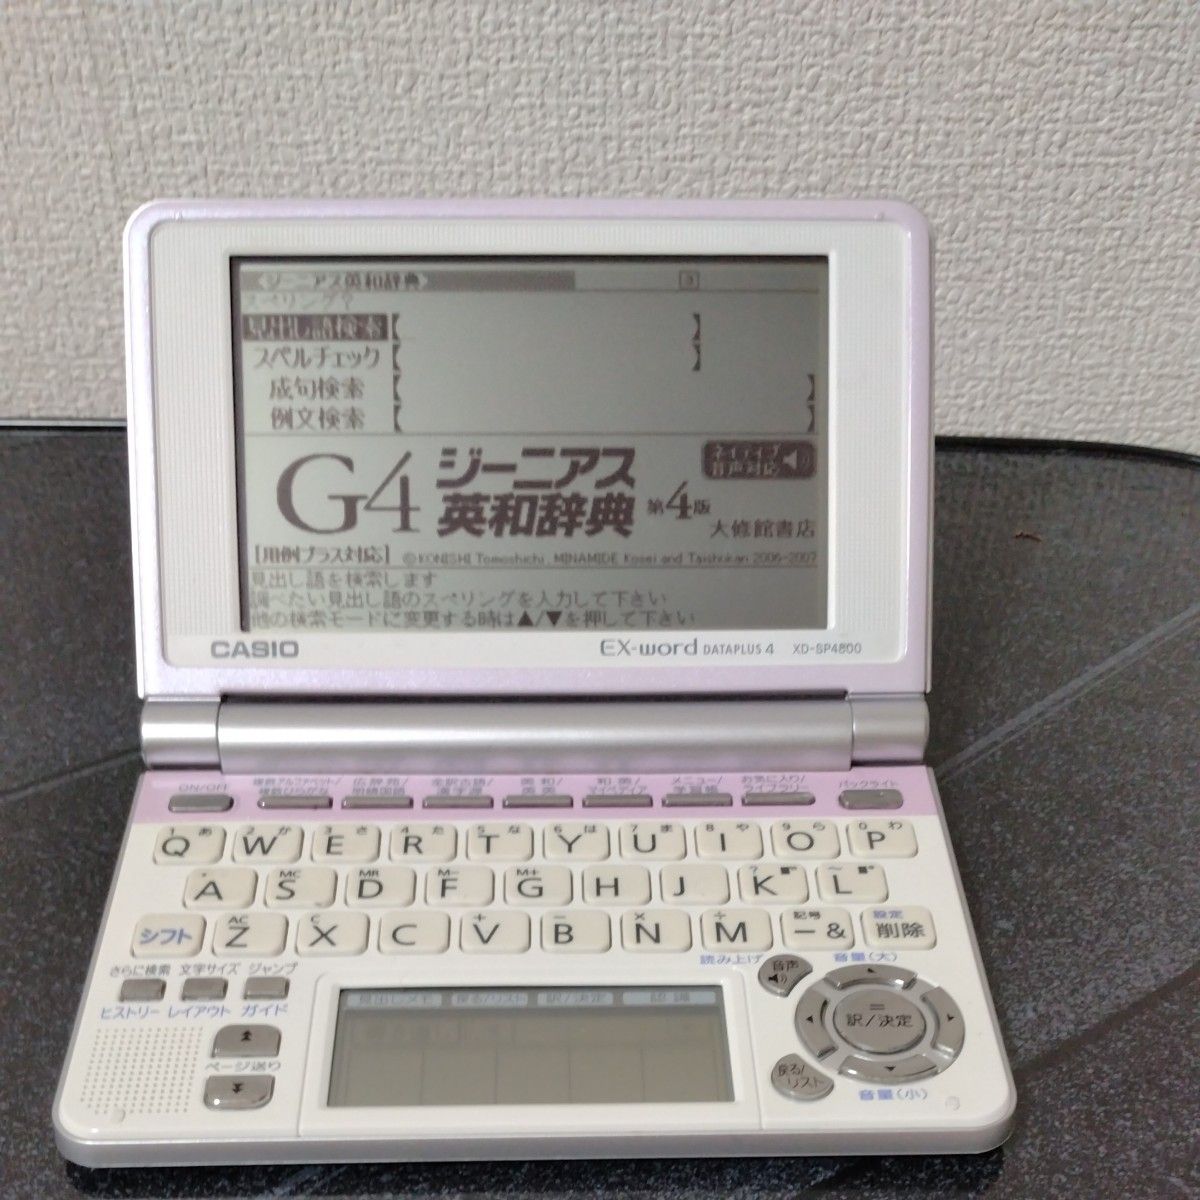 EX-word 電子辞書 カシオ SP4800 